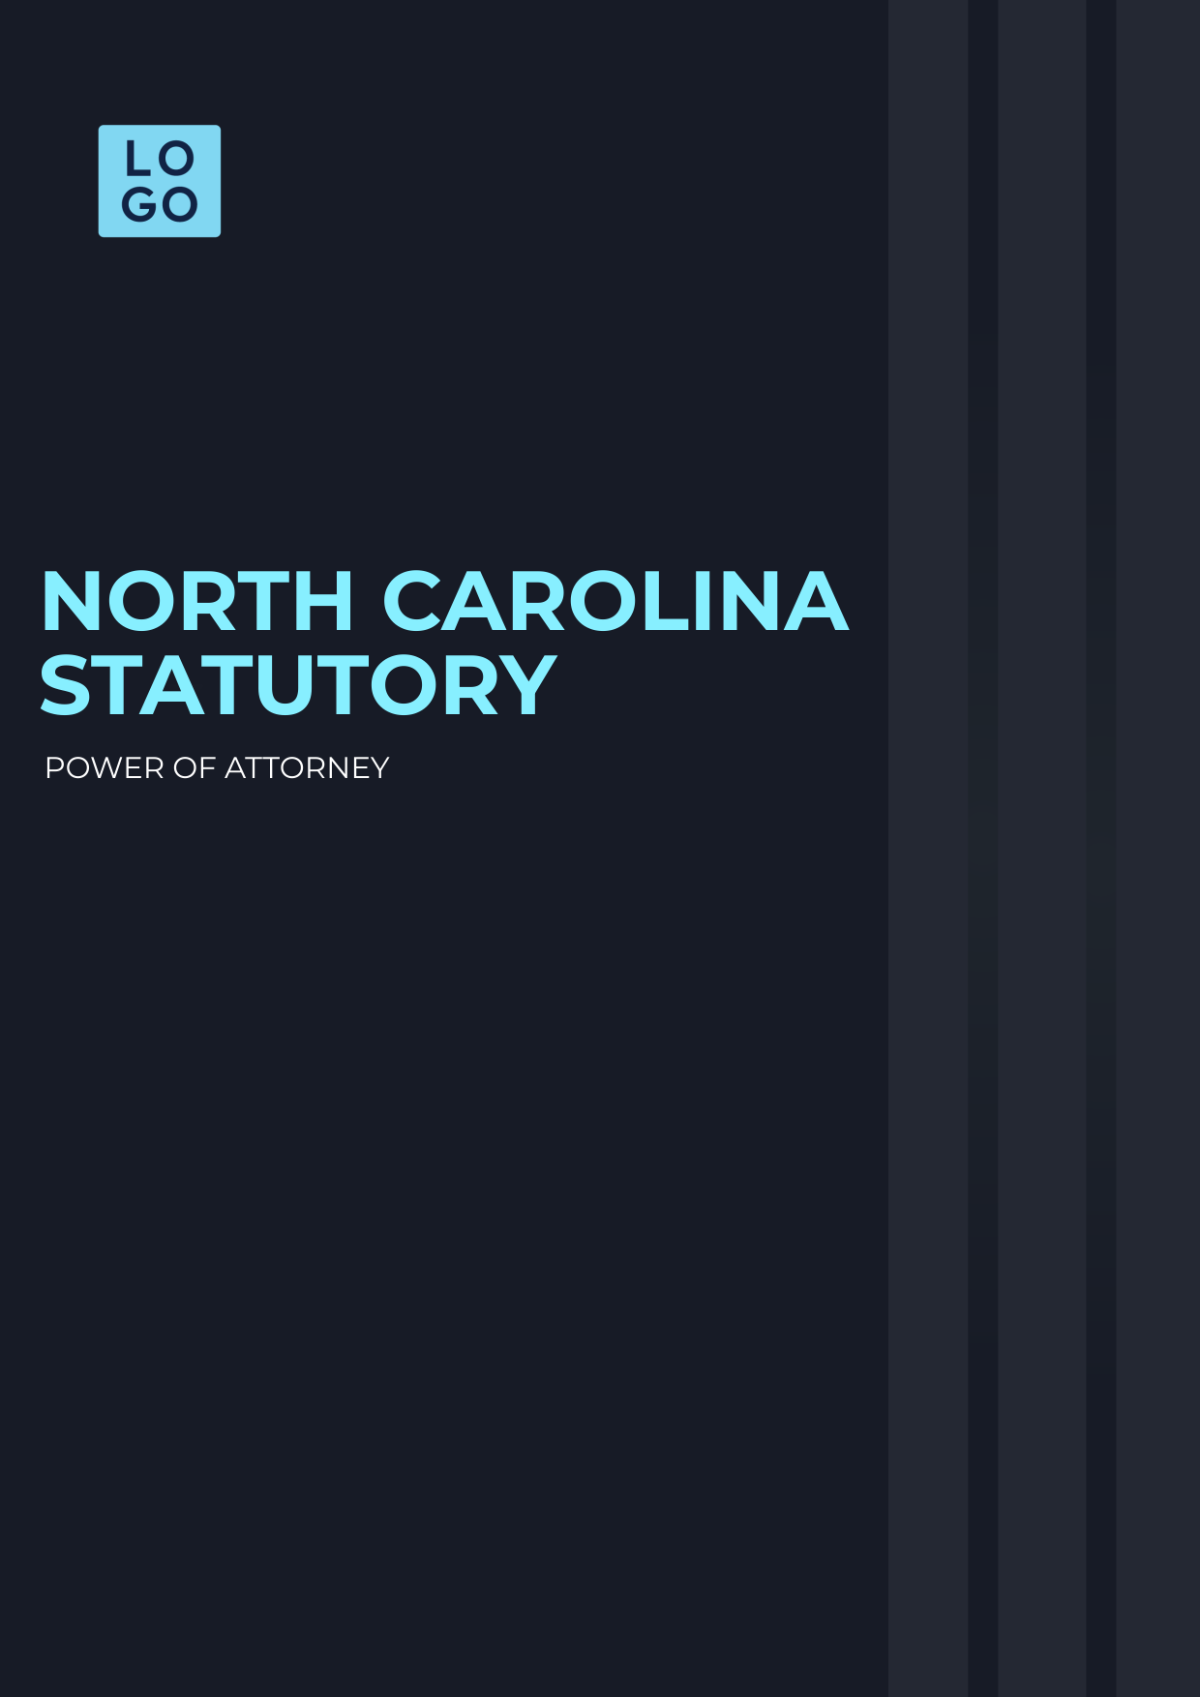 Free North Carolina Statutory Power of Attorney Template